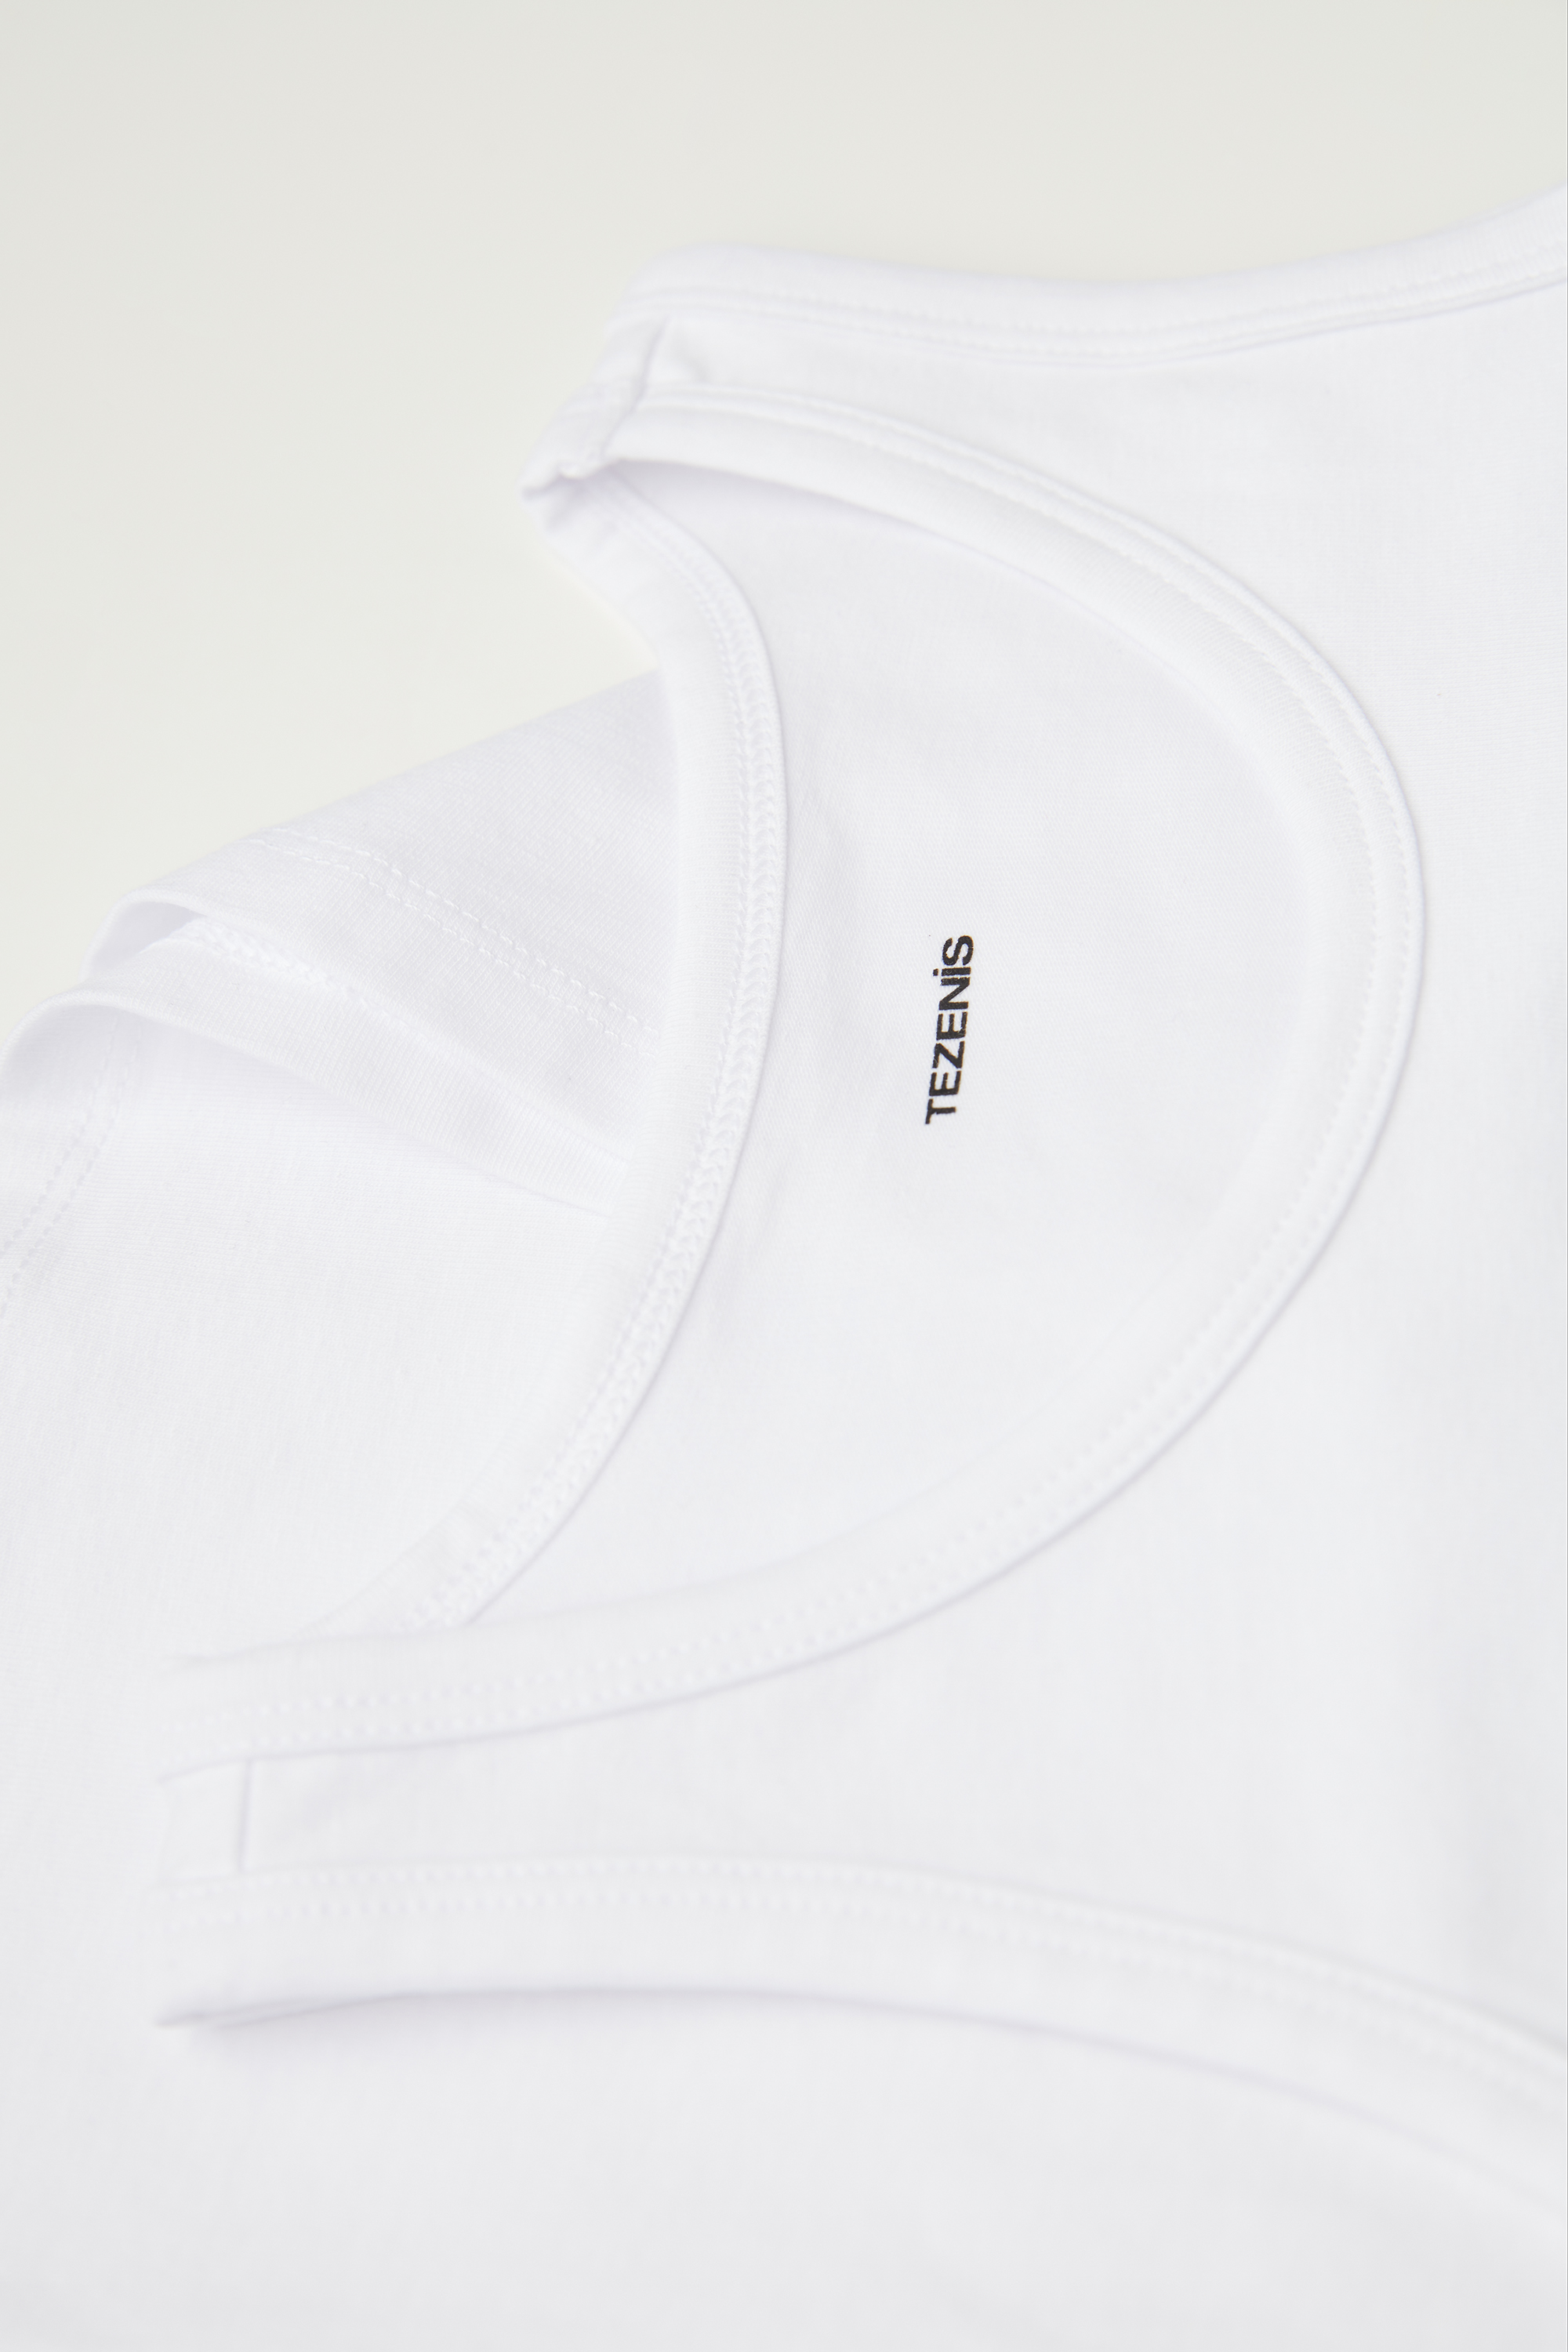 Unisex Kids' Basic Cotton Camisole with Wide Shoulder Straps